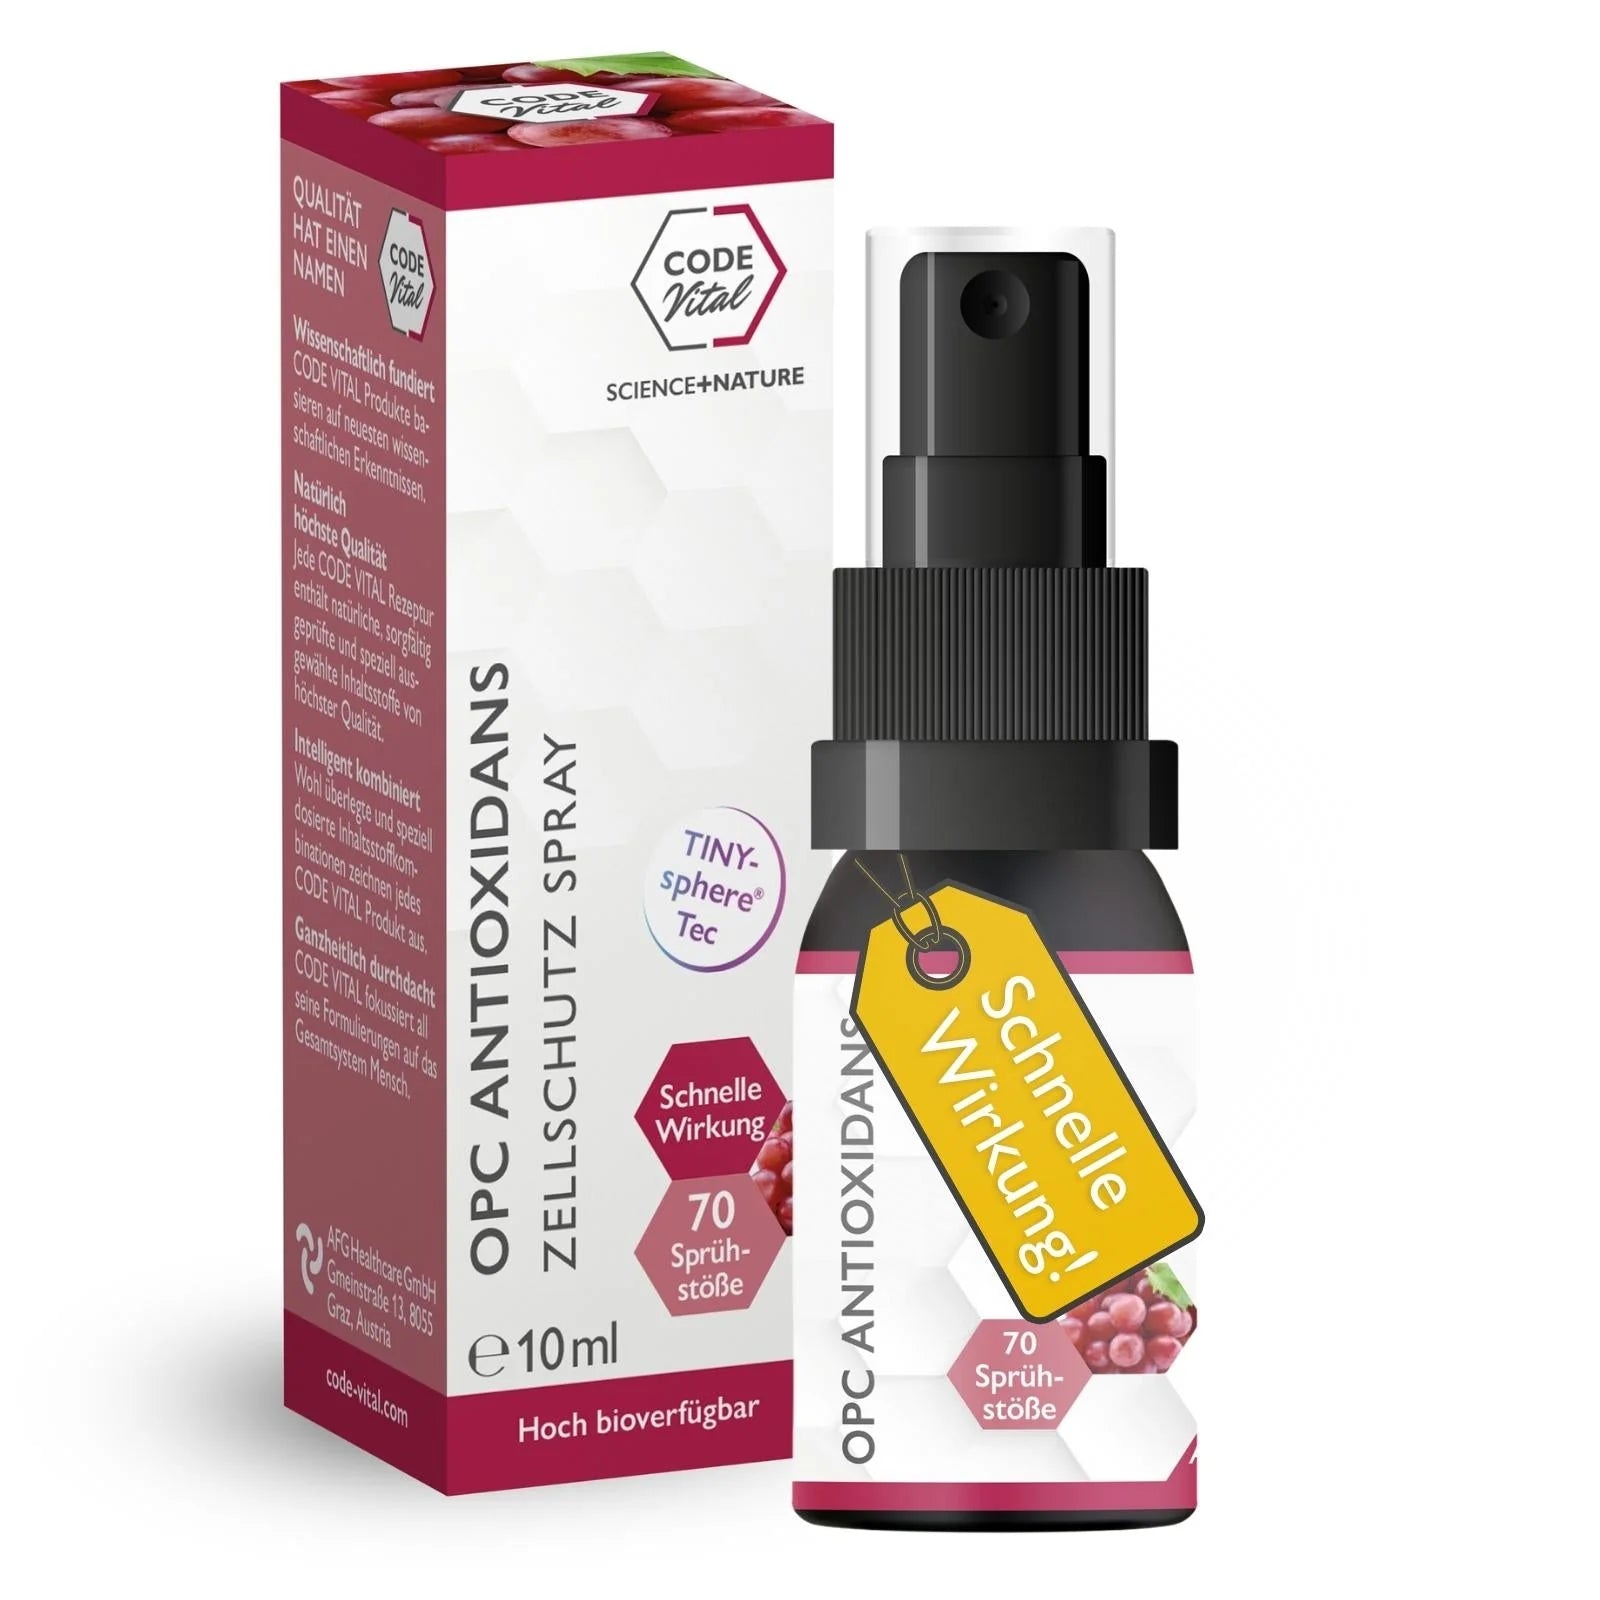 Code Vital OPC Antioxidans Zellschutz Spray - Für jede KÖRPERZELLE